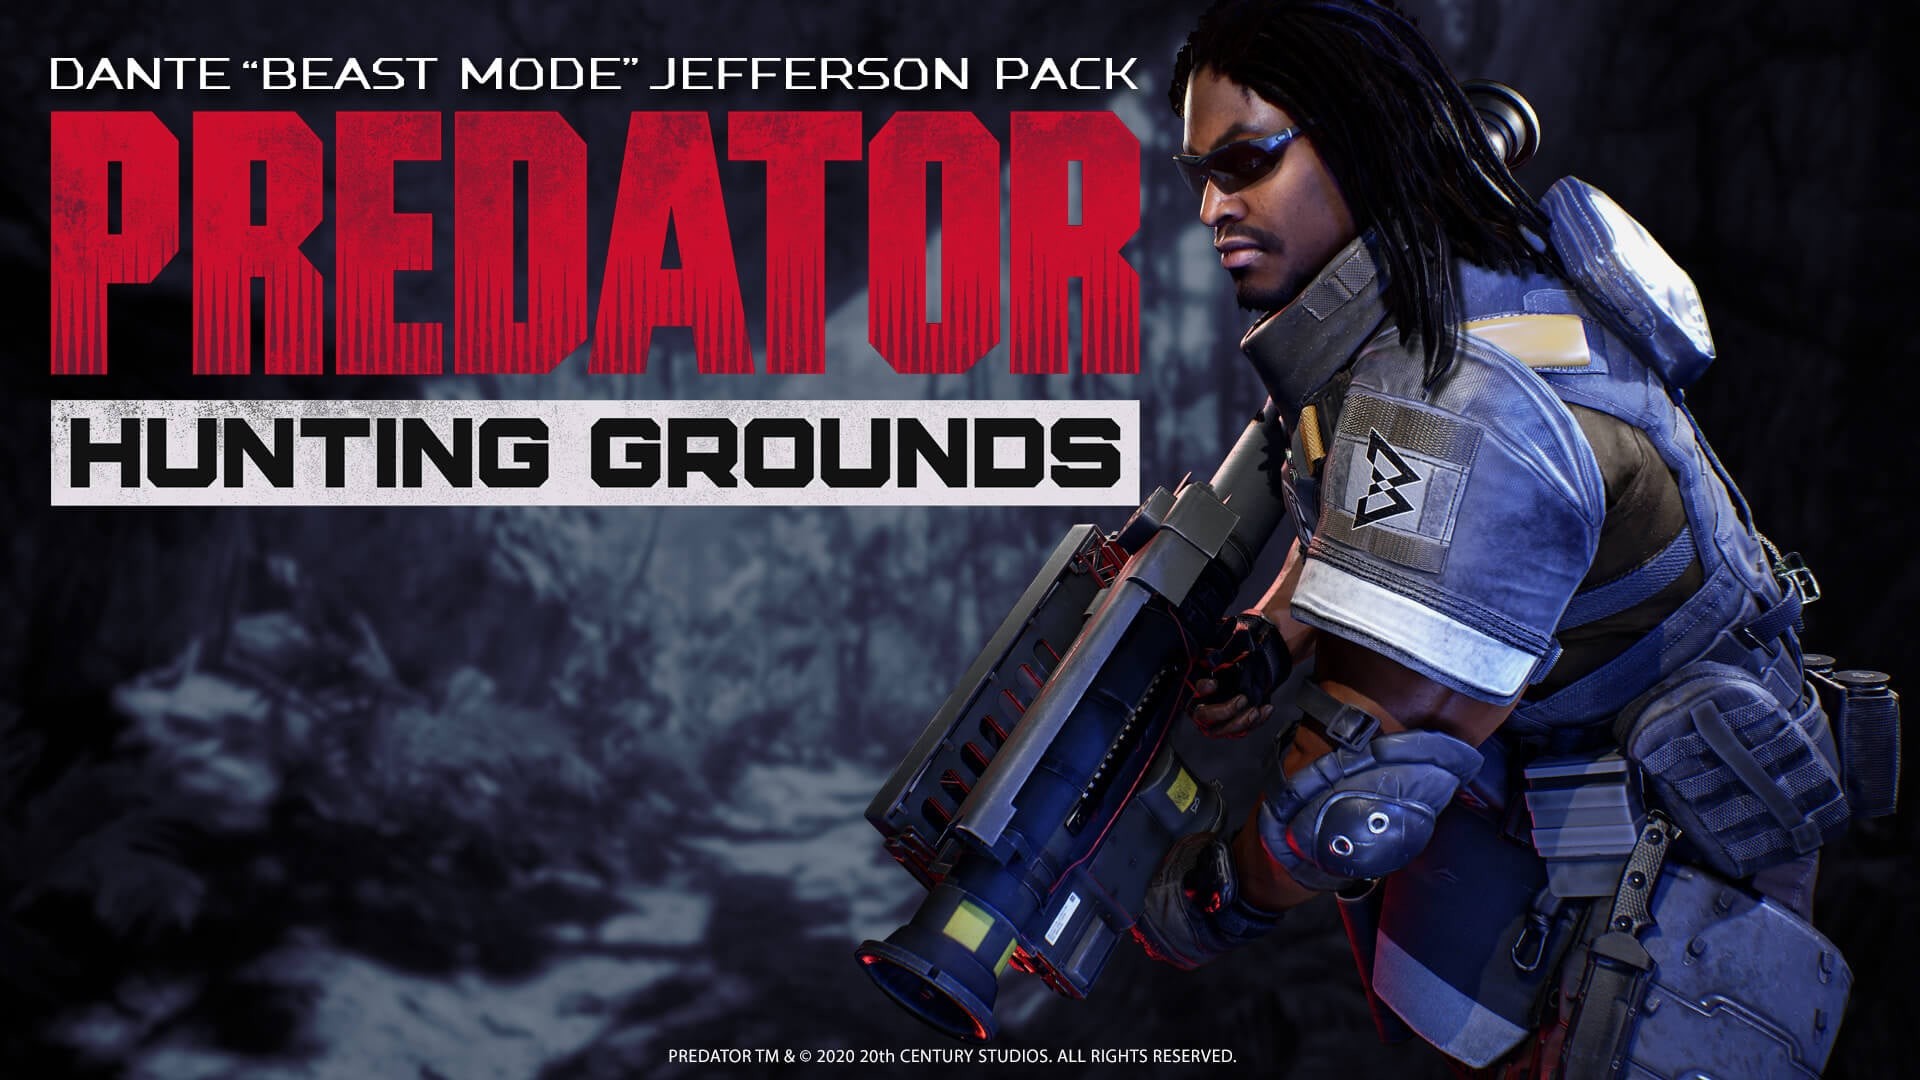 [$ 2.14] Predator: Hunting Grounds - Dante 